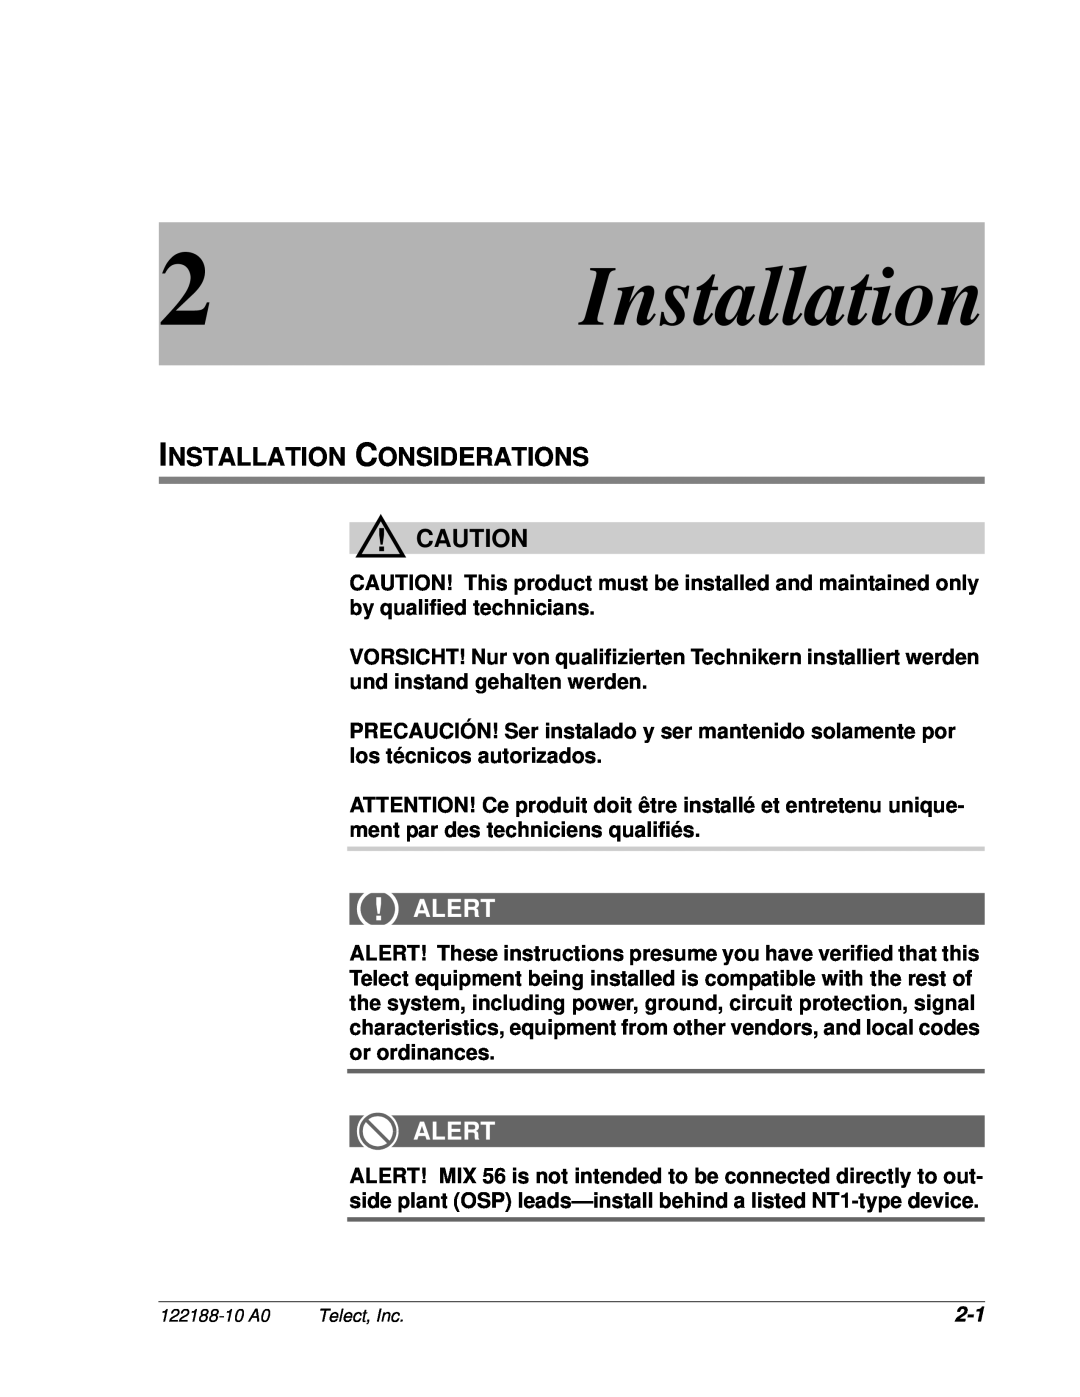 Telect MIX 56 user manual Installation Considerations, Alert 